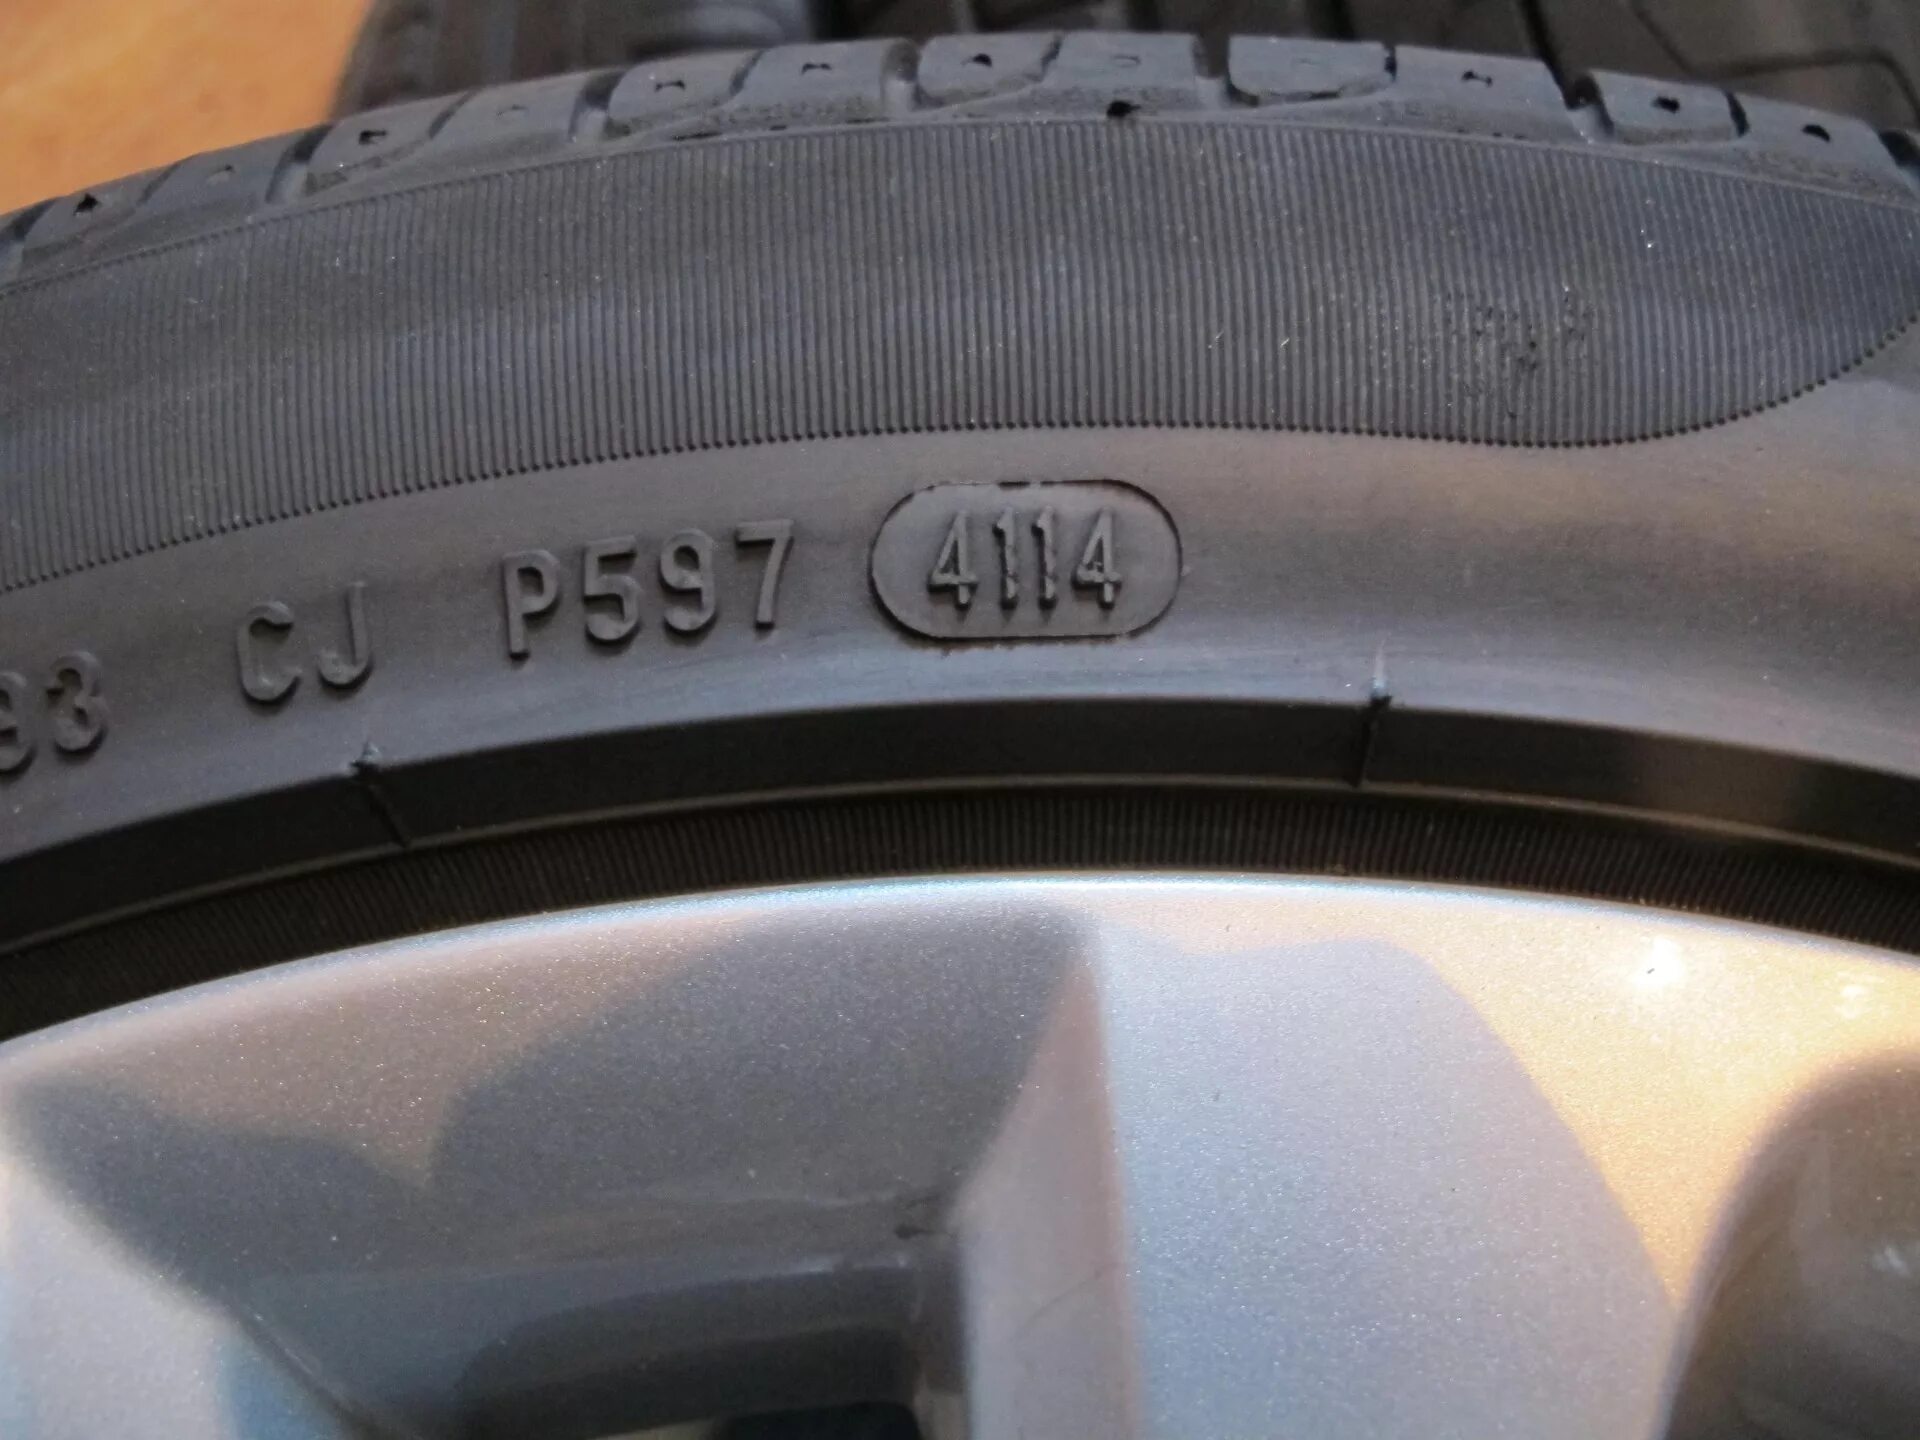 Pirelli Cinturato p7 Дата выпуска. Дата выпуска на шине Pirelli p7. Pirelli Cinturato p1 маркировка даты выпуска. Дата производства на шинах Пирелли.